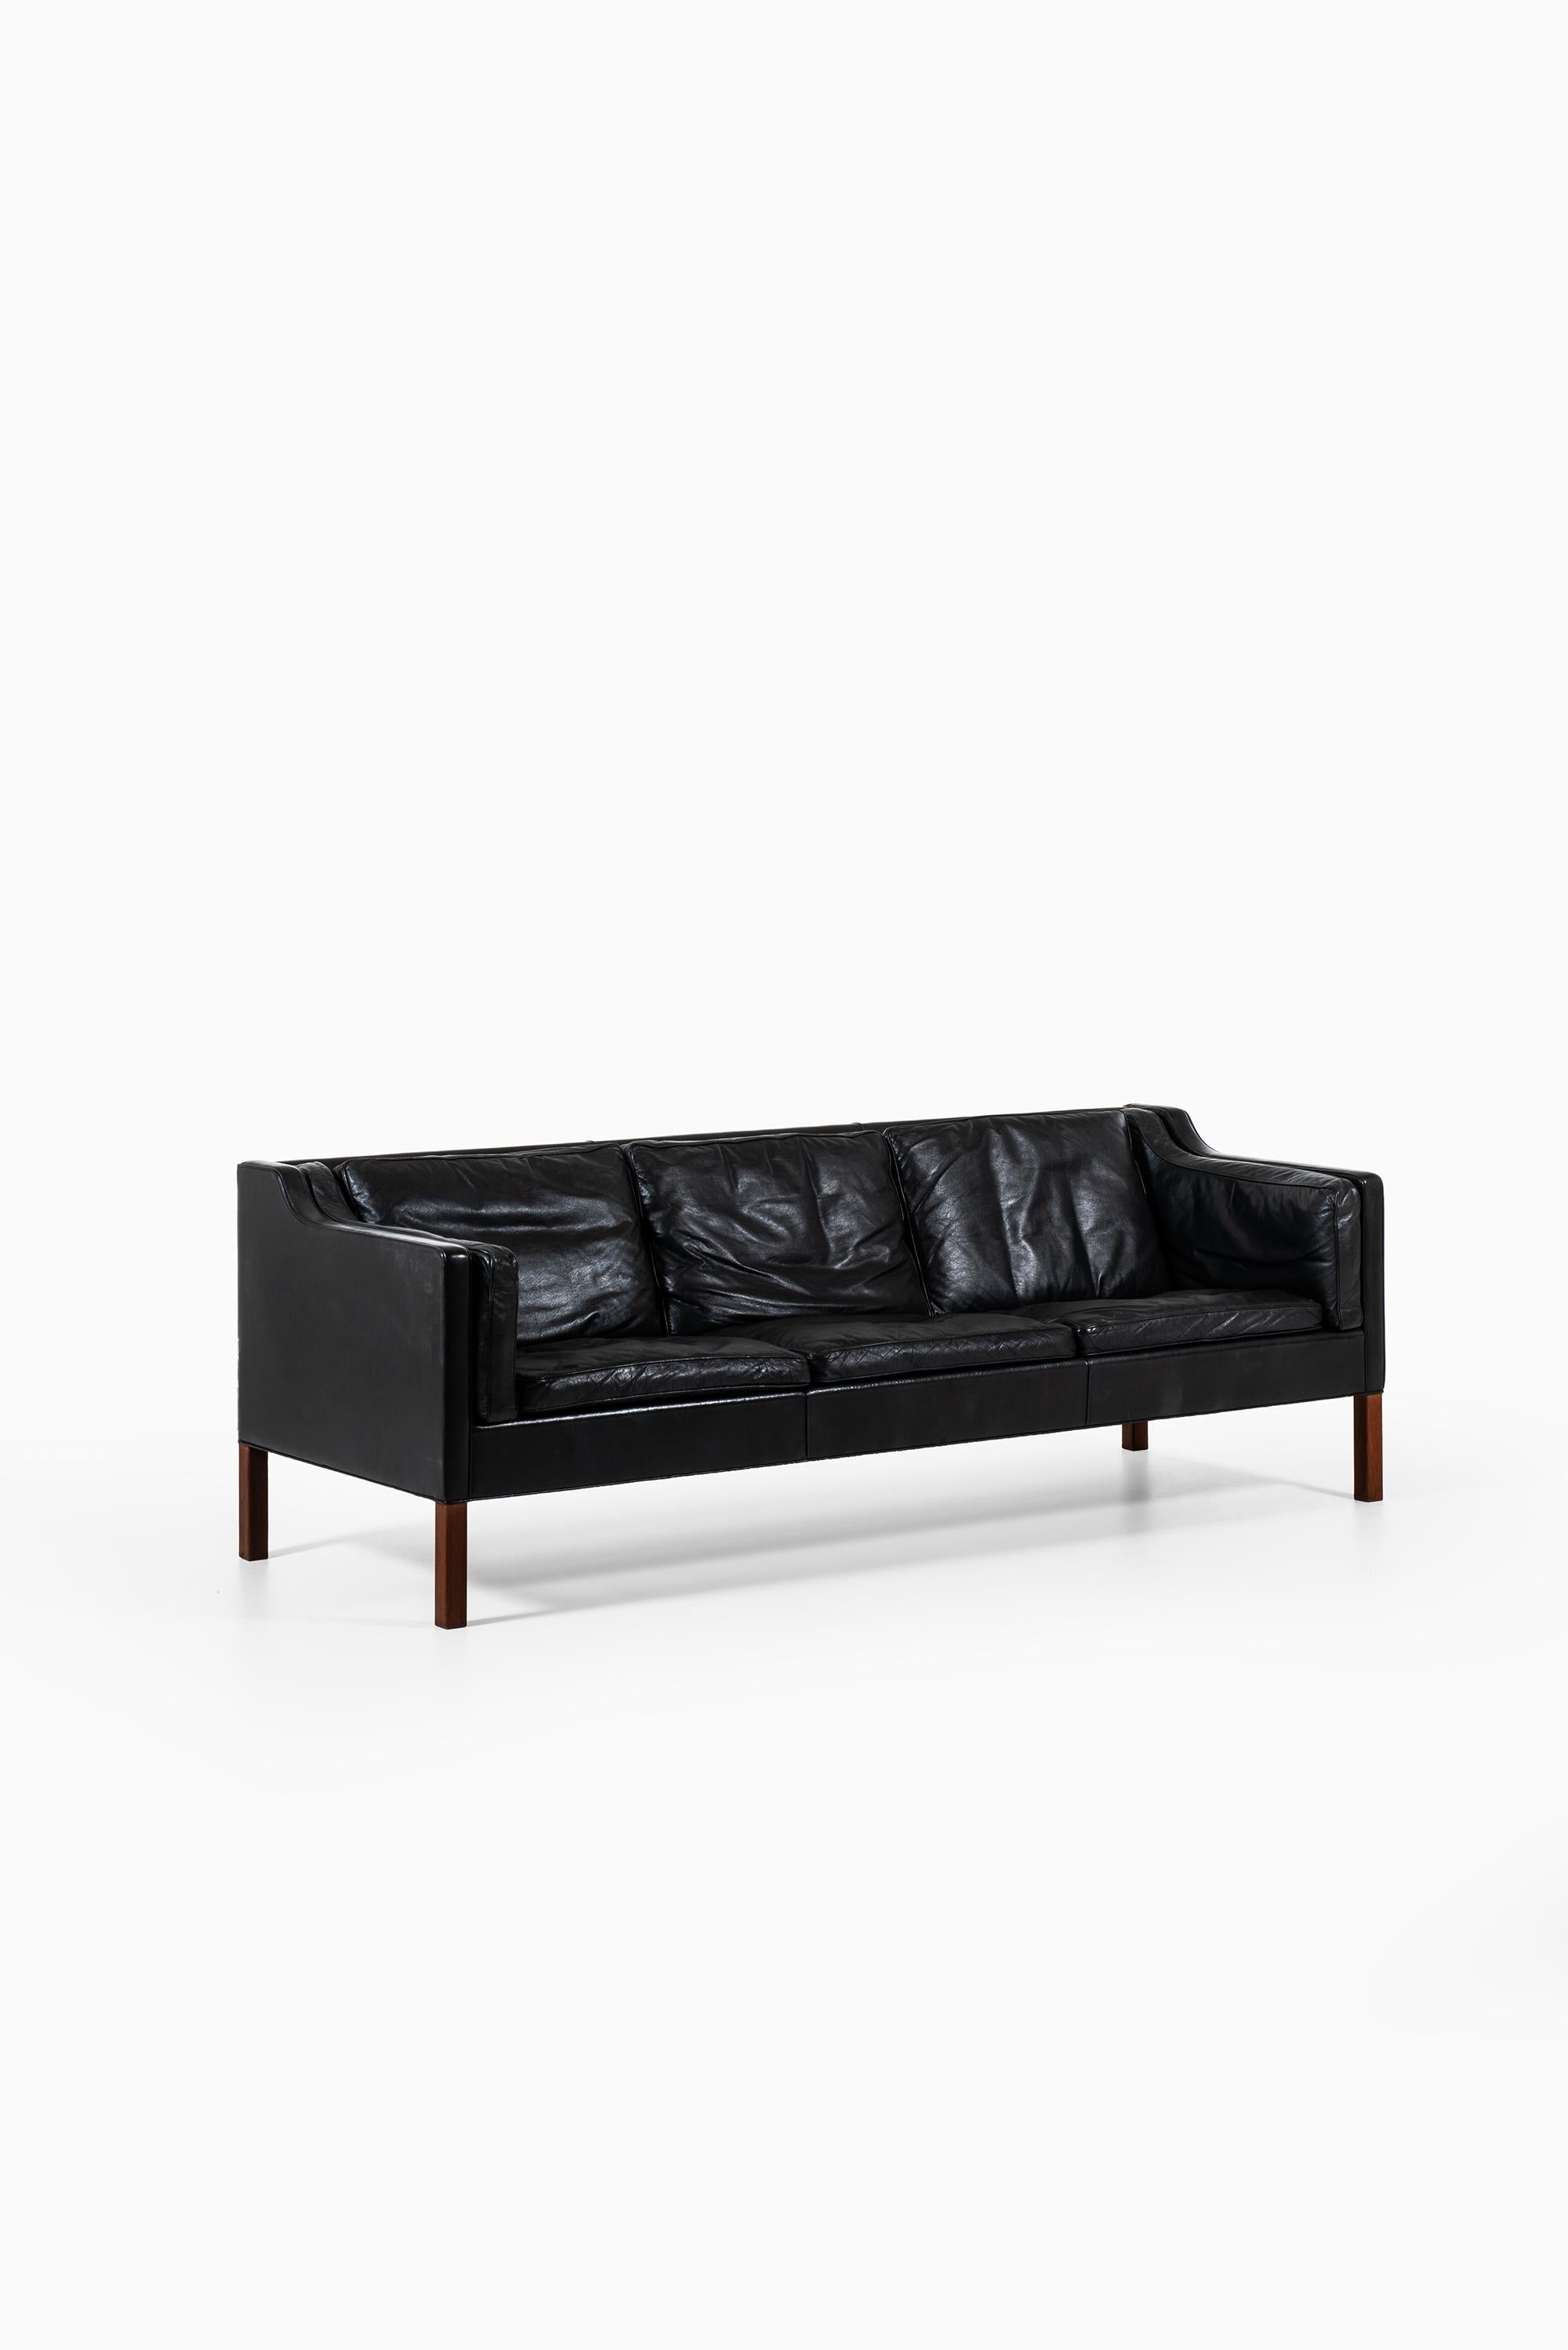 Leather Børge Mogensen Sofa Model 2213 by Fredericia Stolefabrik in Denmark For Sale